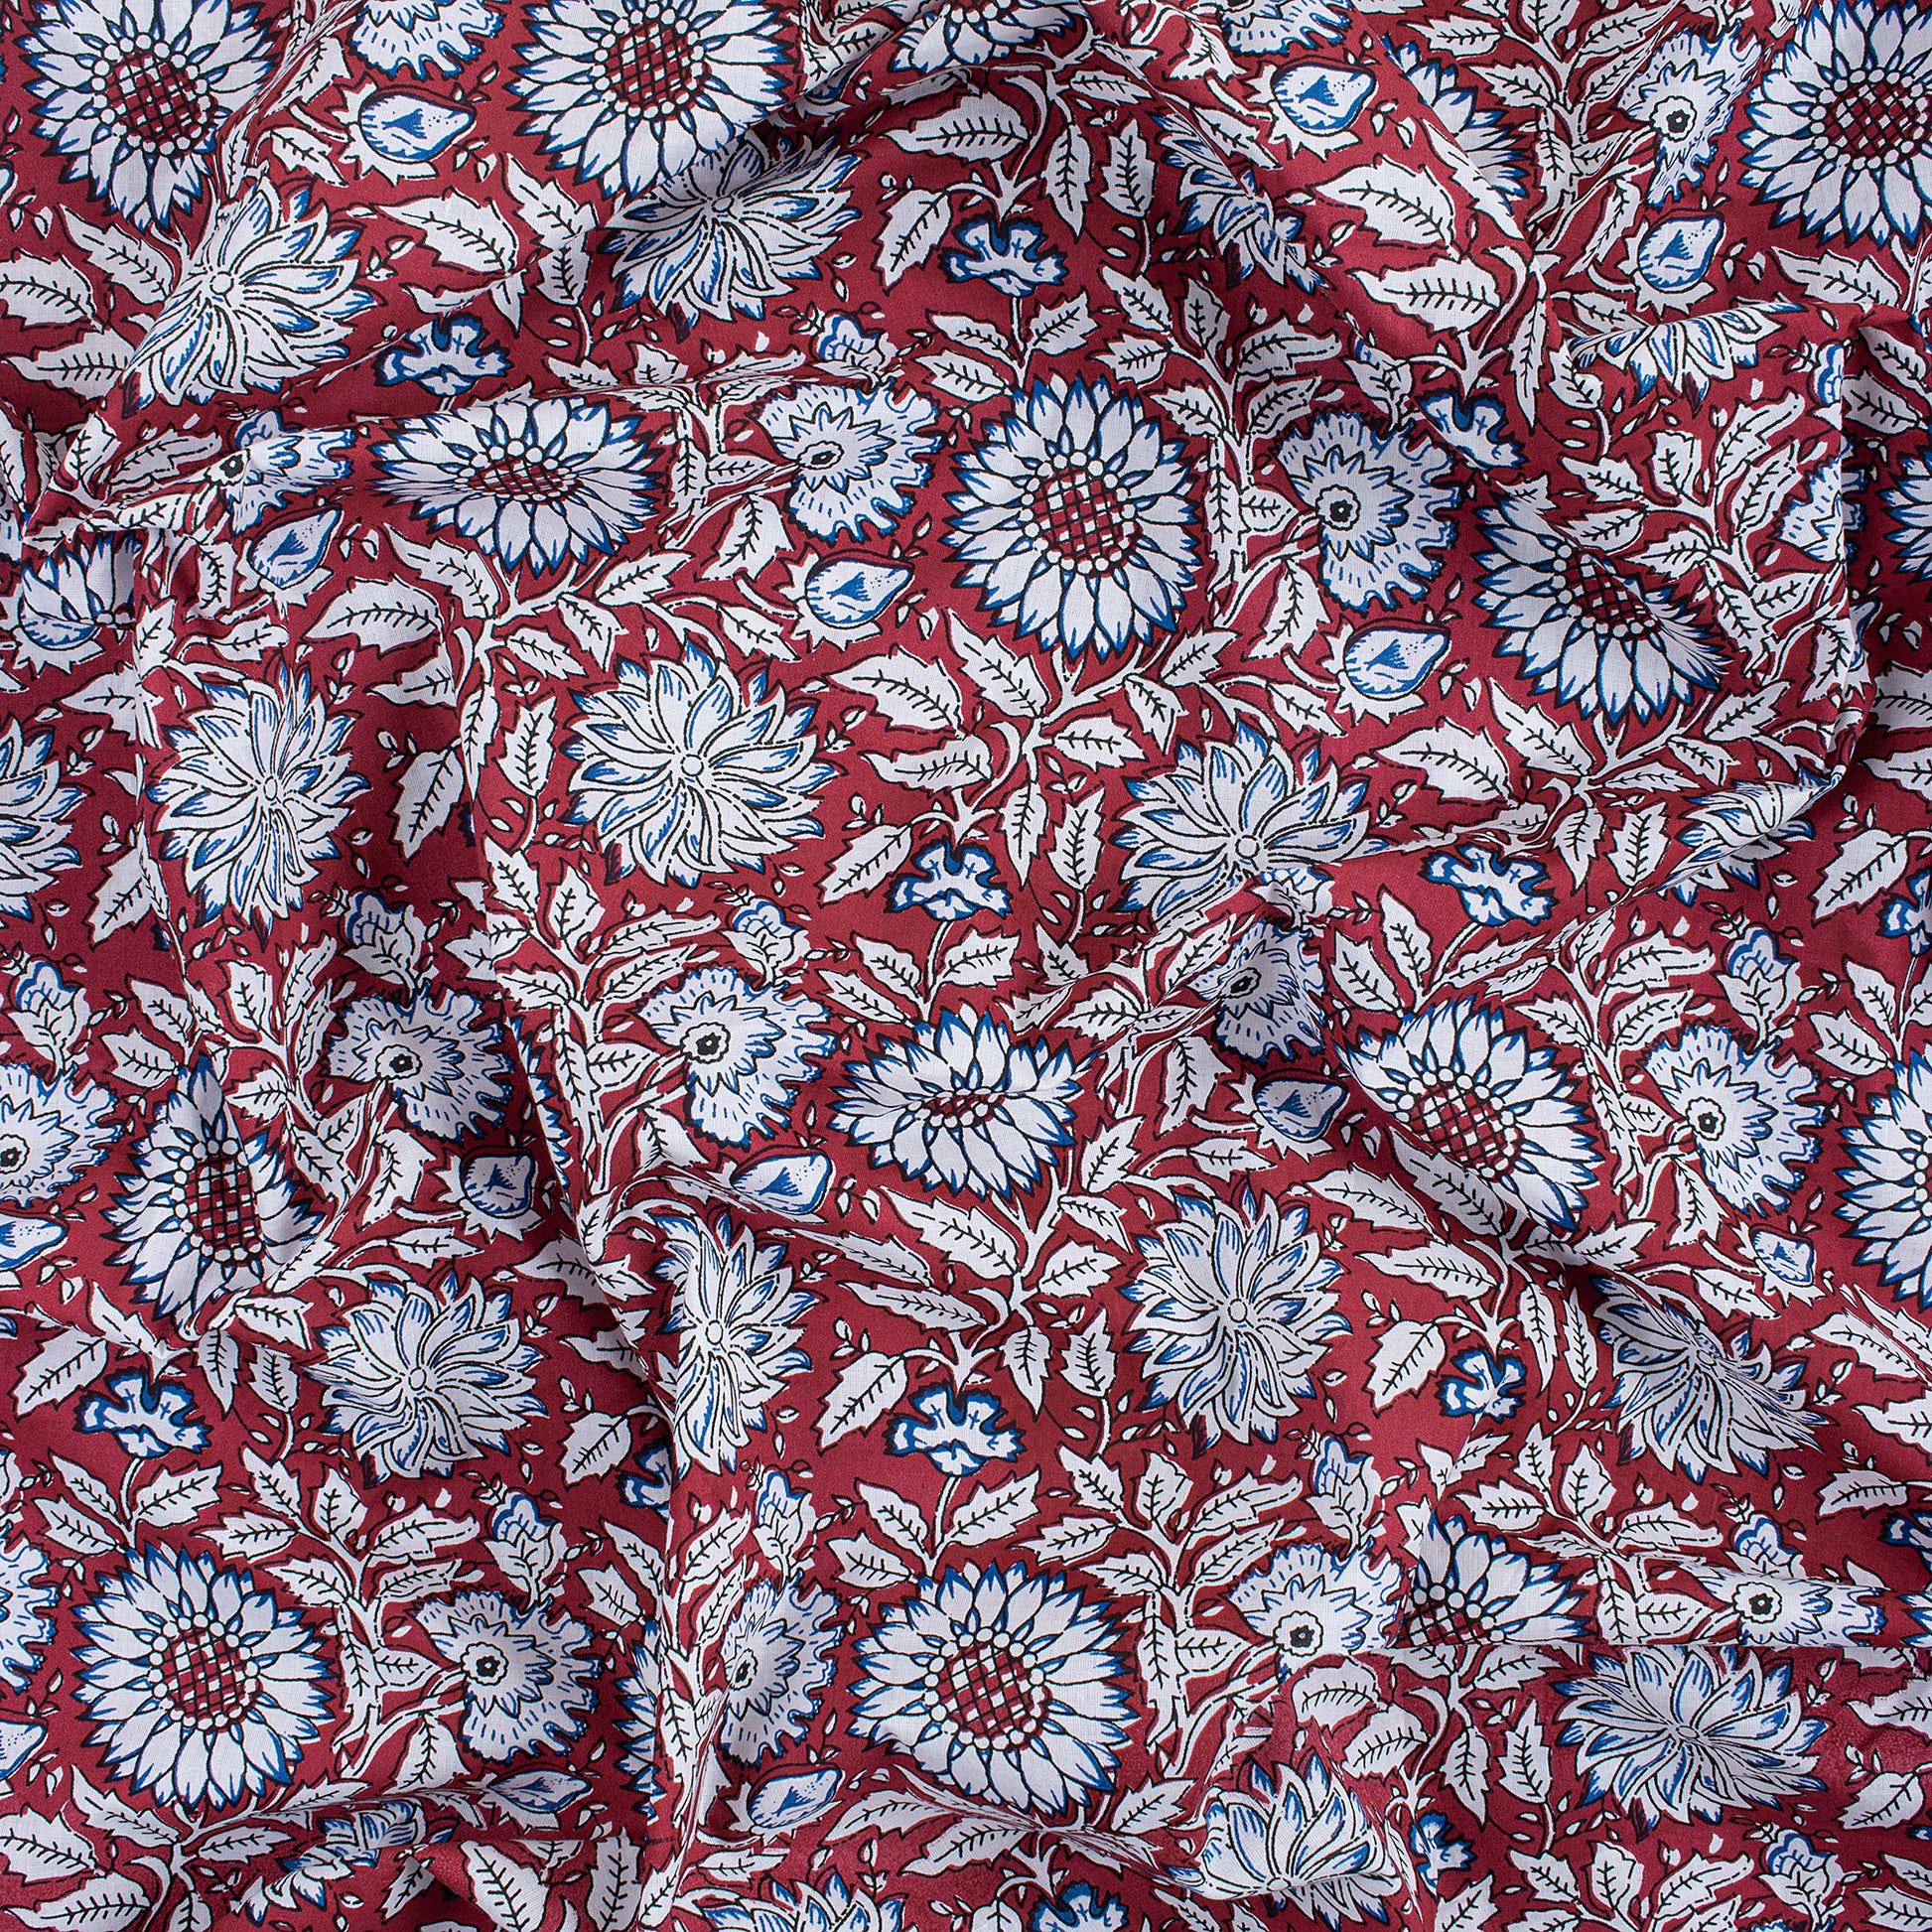 Natural Dye Printed Soft Cotton Jaipur Block Print Fabric